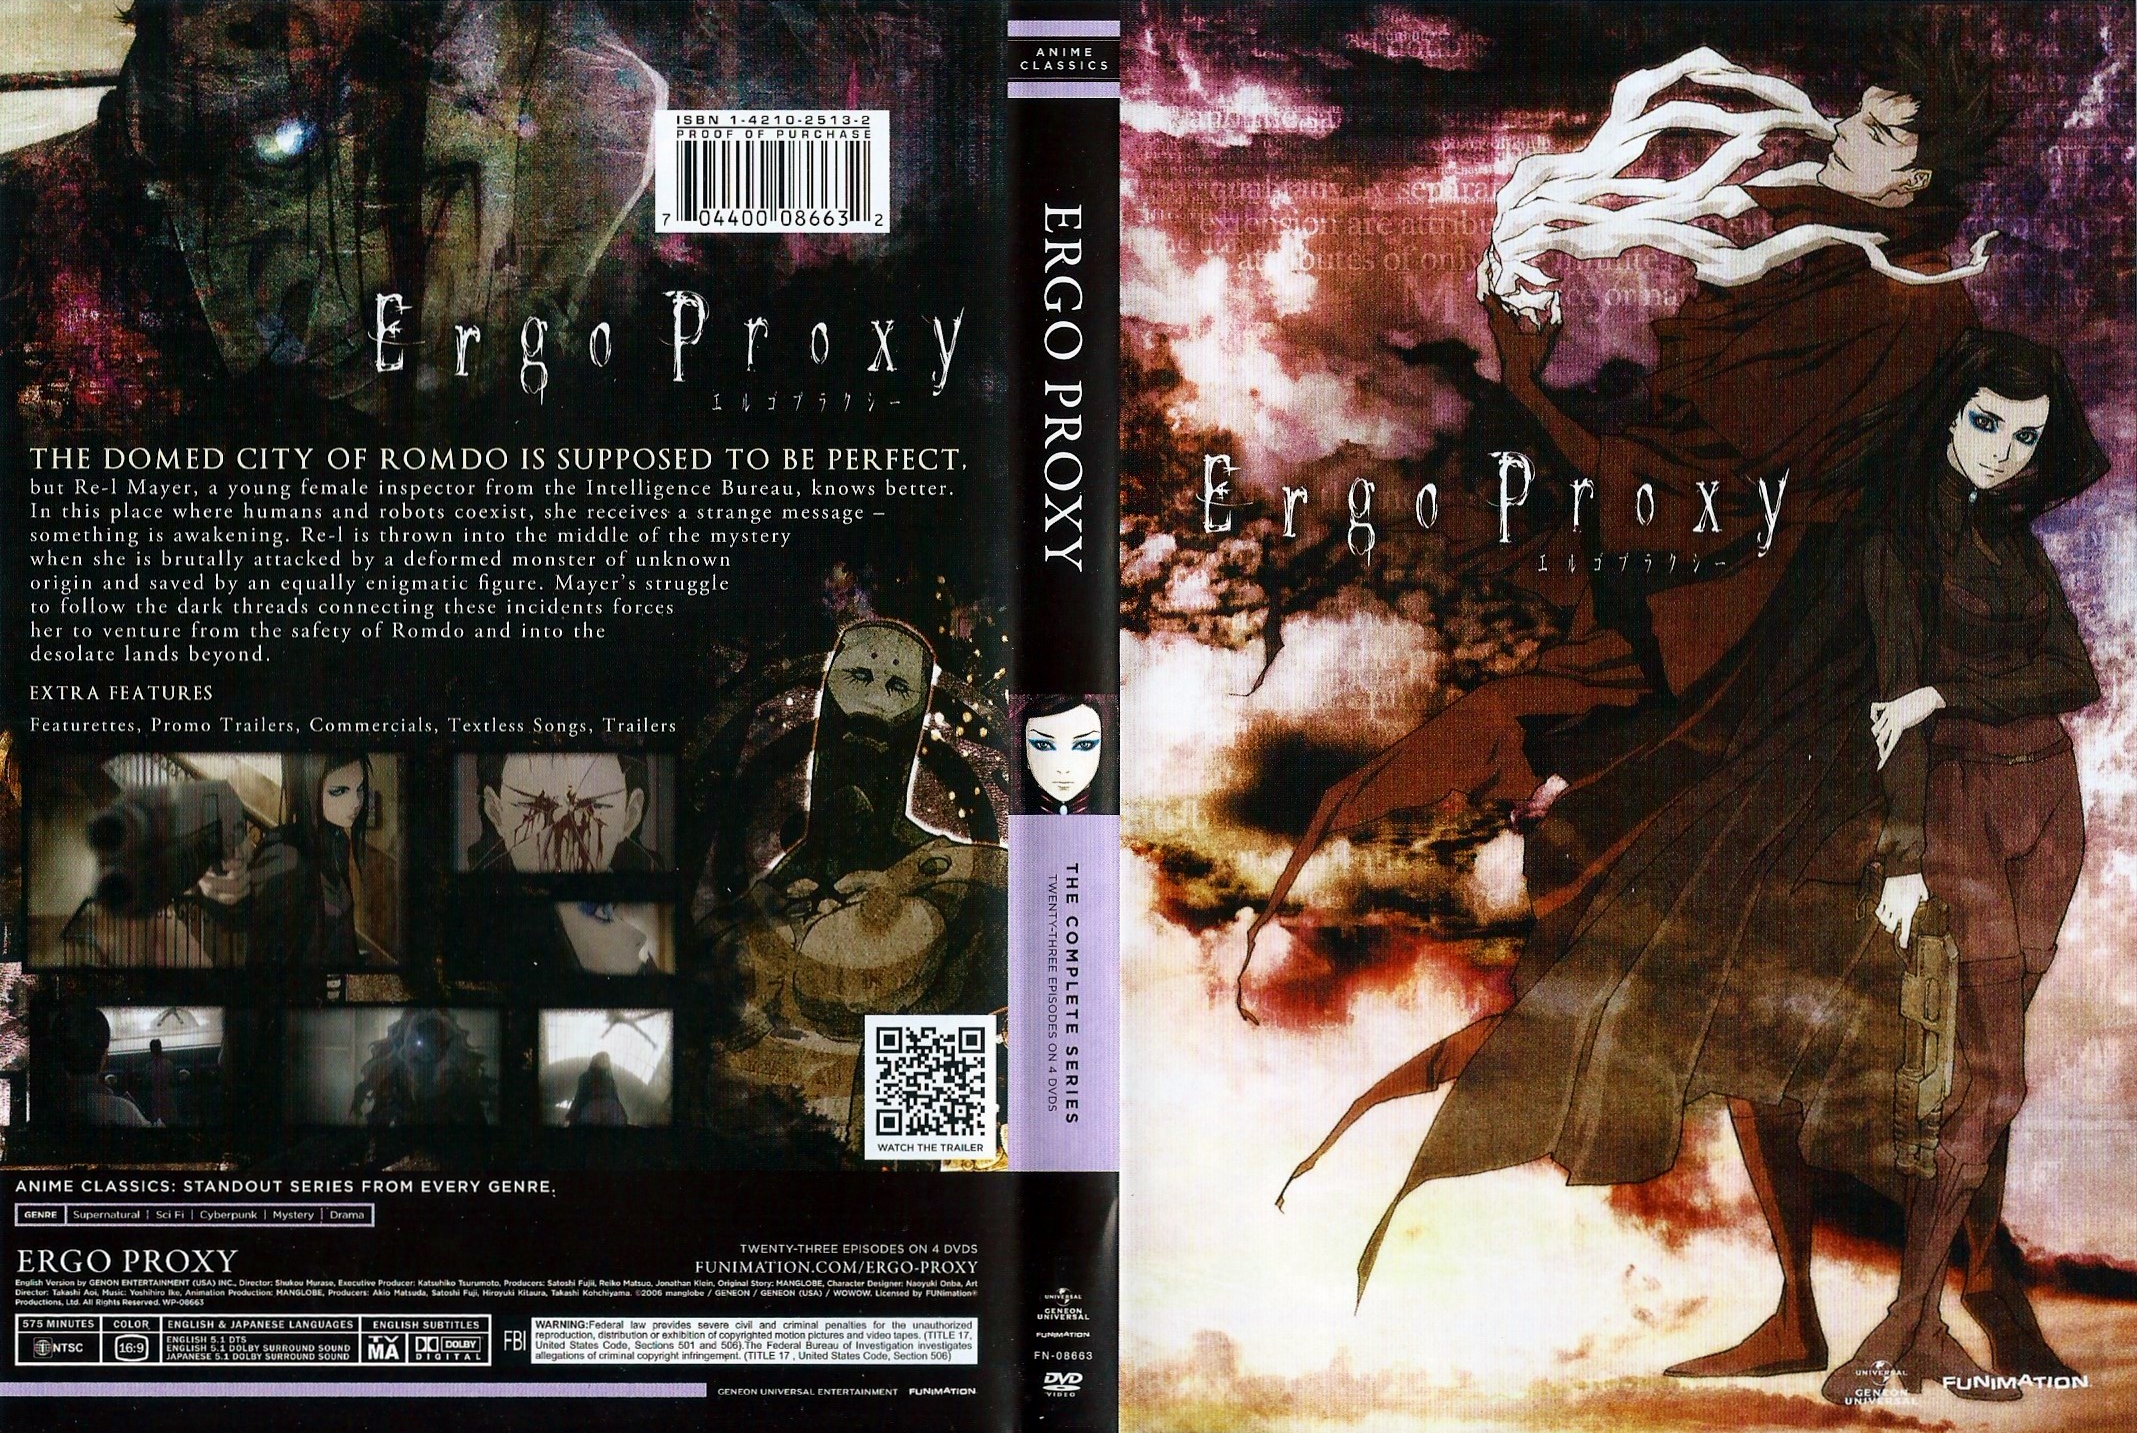 Ergo Proxy - The Complete Series - Anime Classics - DVD